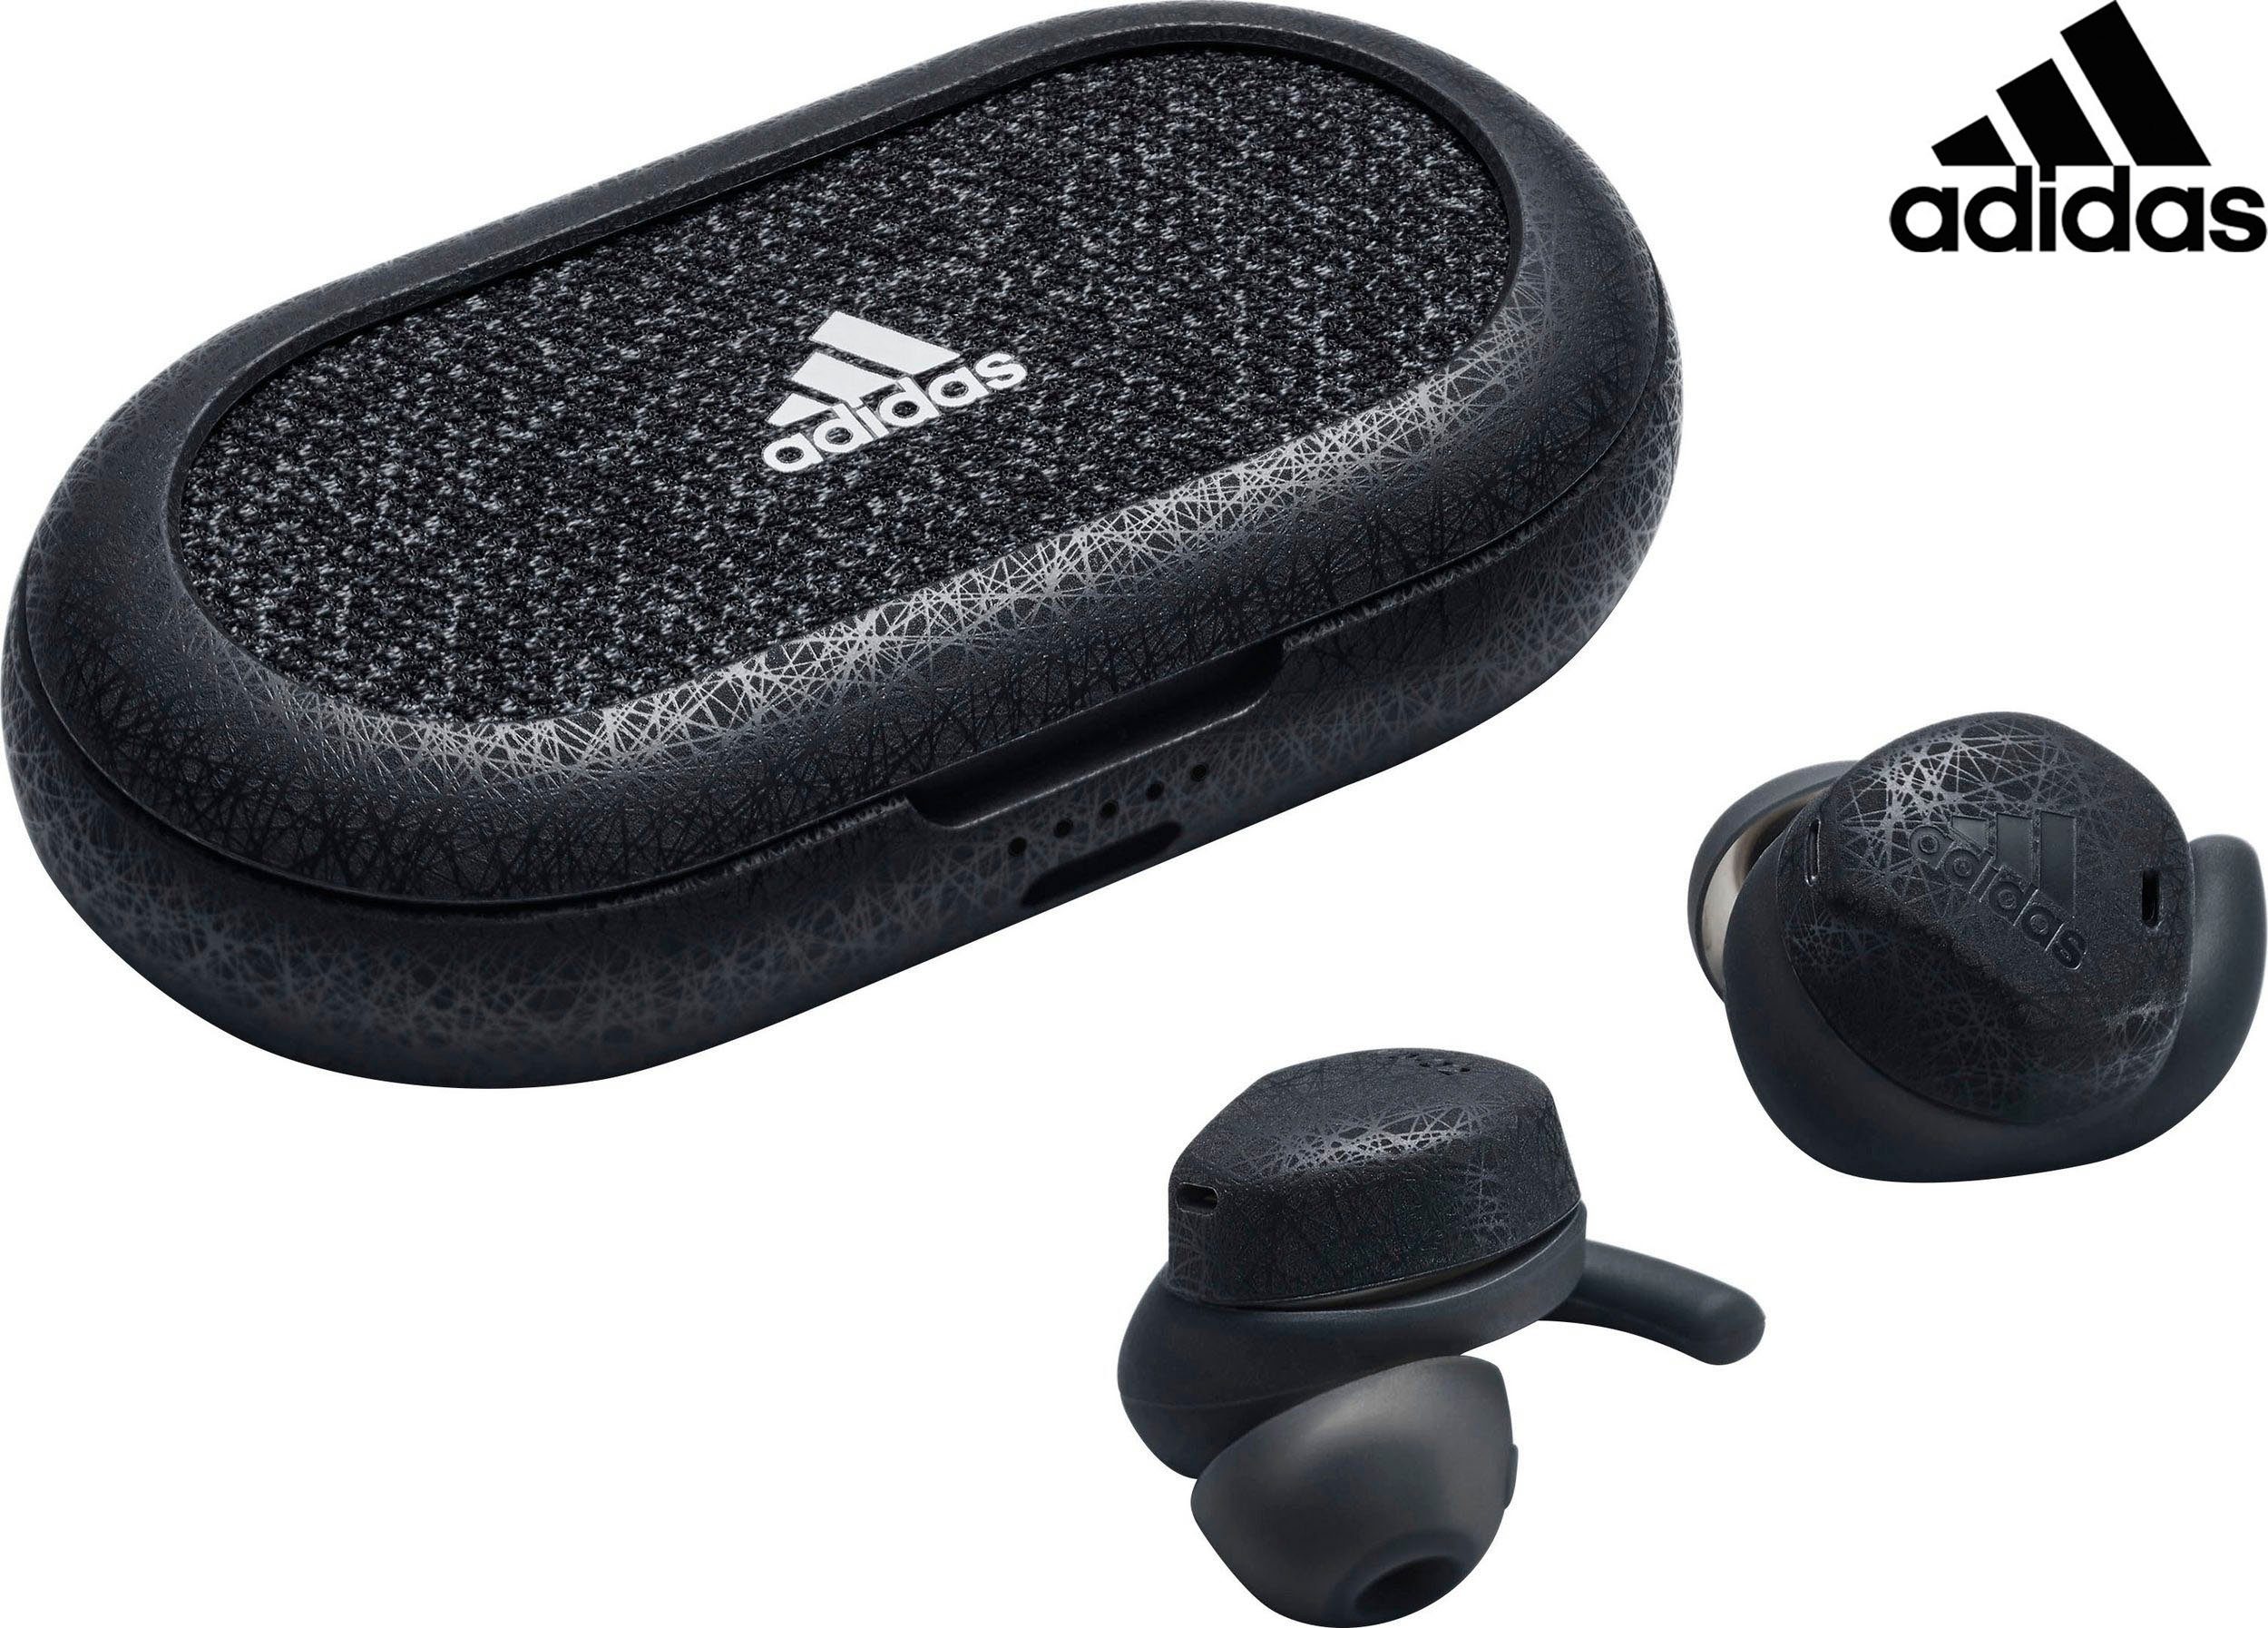 adidas Originals FWD-02 SPORT Навушники-вкладиші (Geräuschisolierung, Bluetooth, Sportkopfhörer)